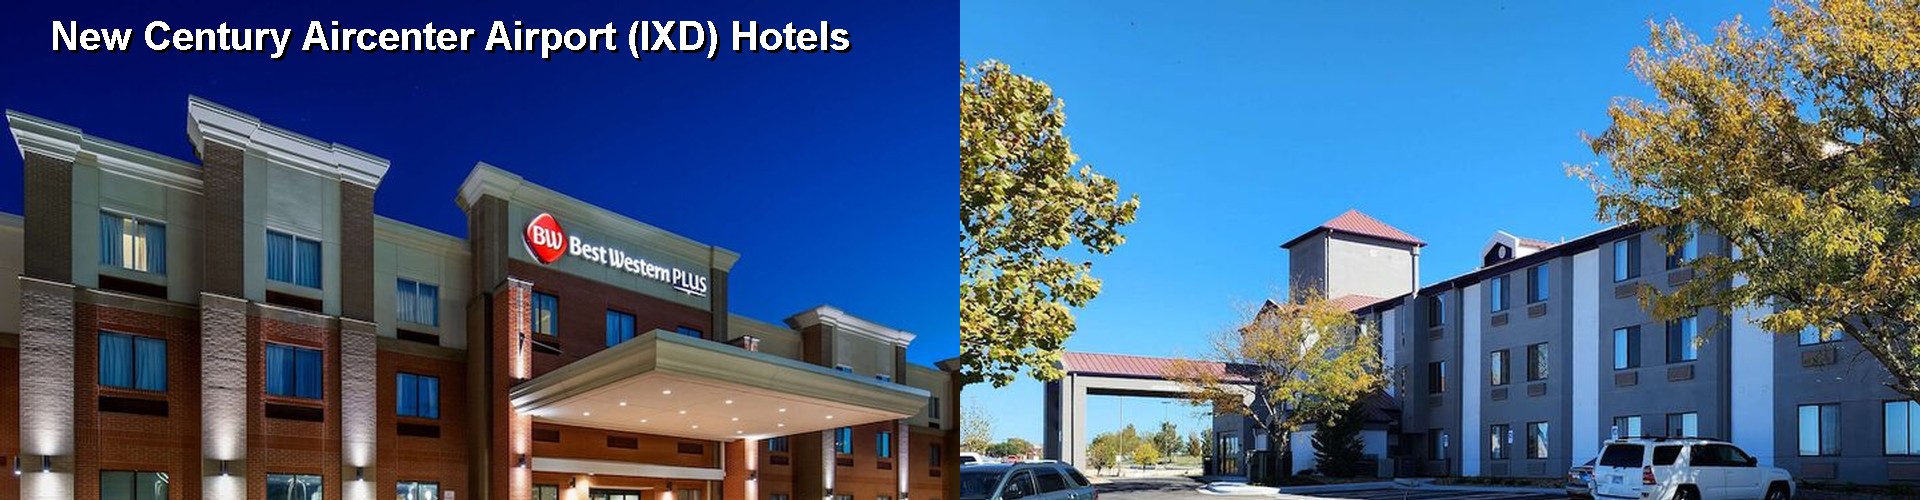 5 Best Hotels near New Century Aircenter Airport (IXD)